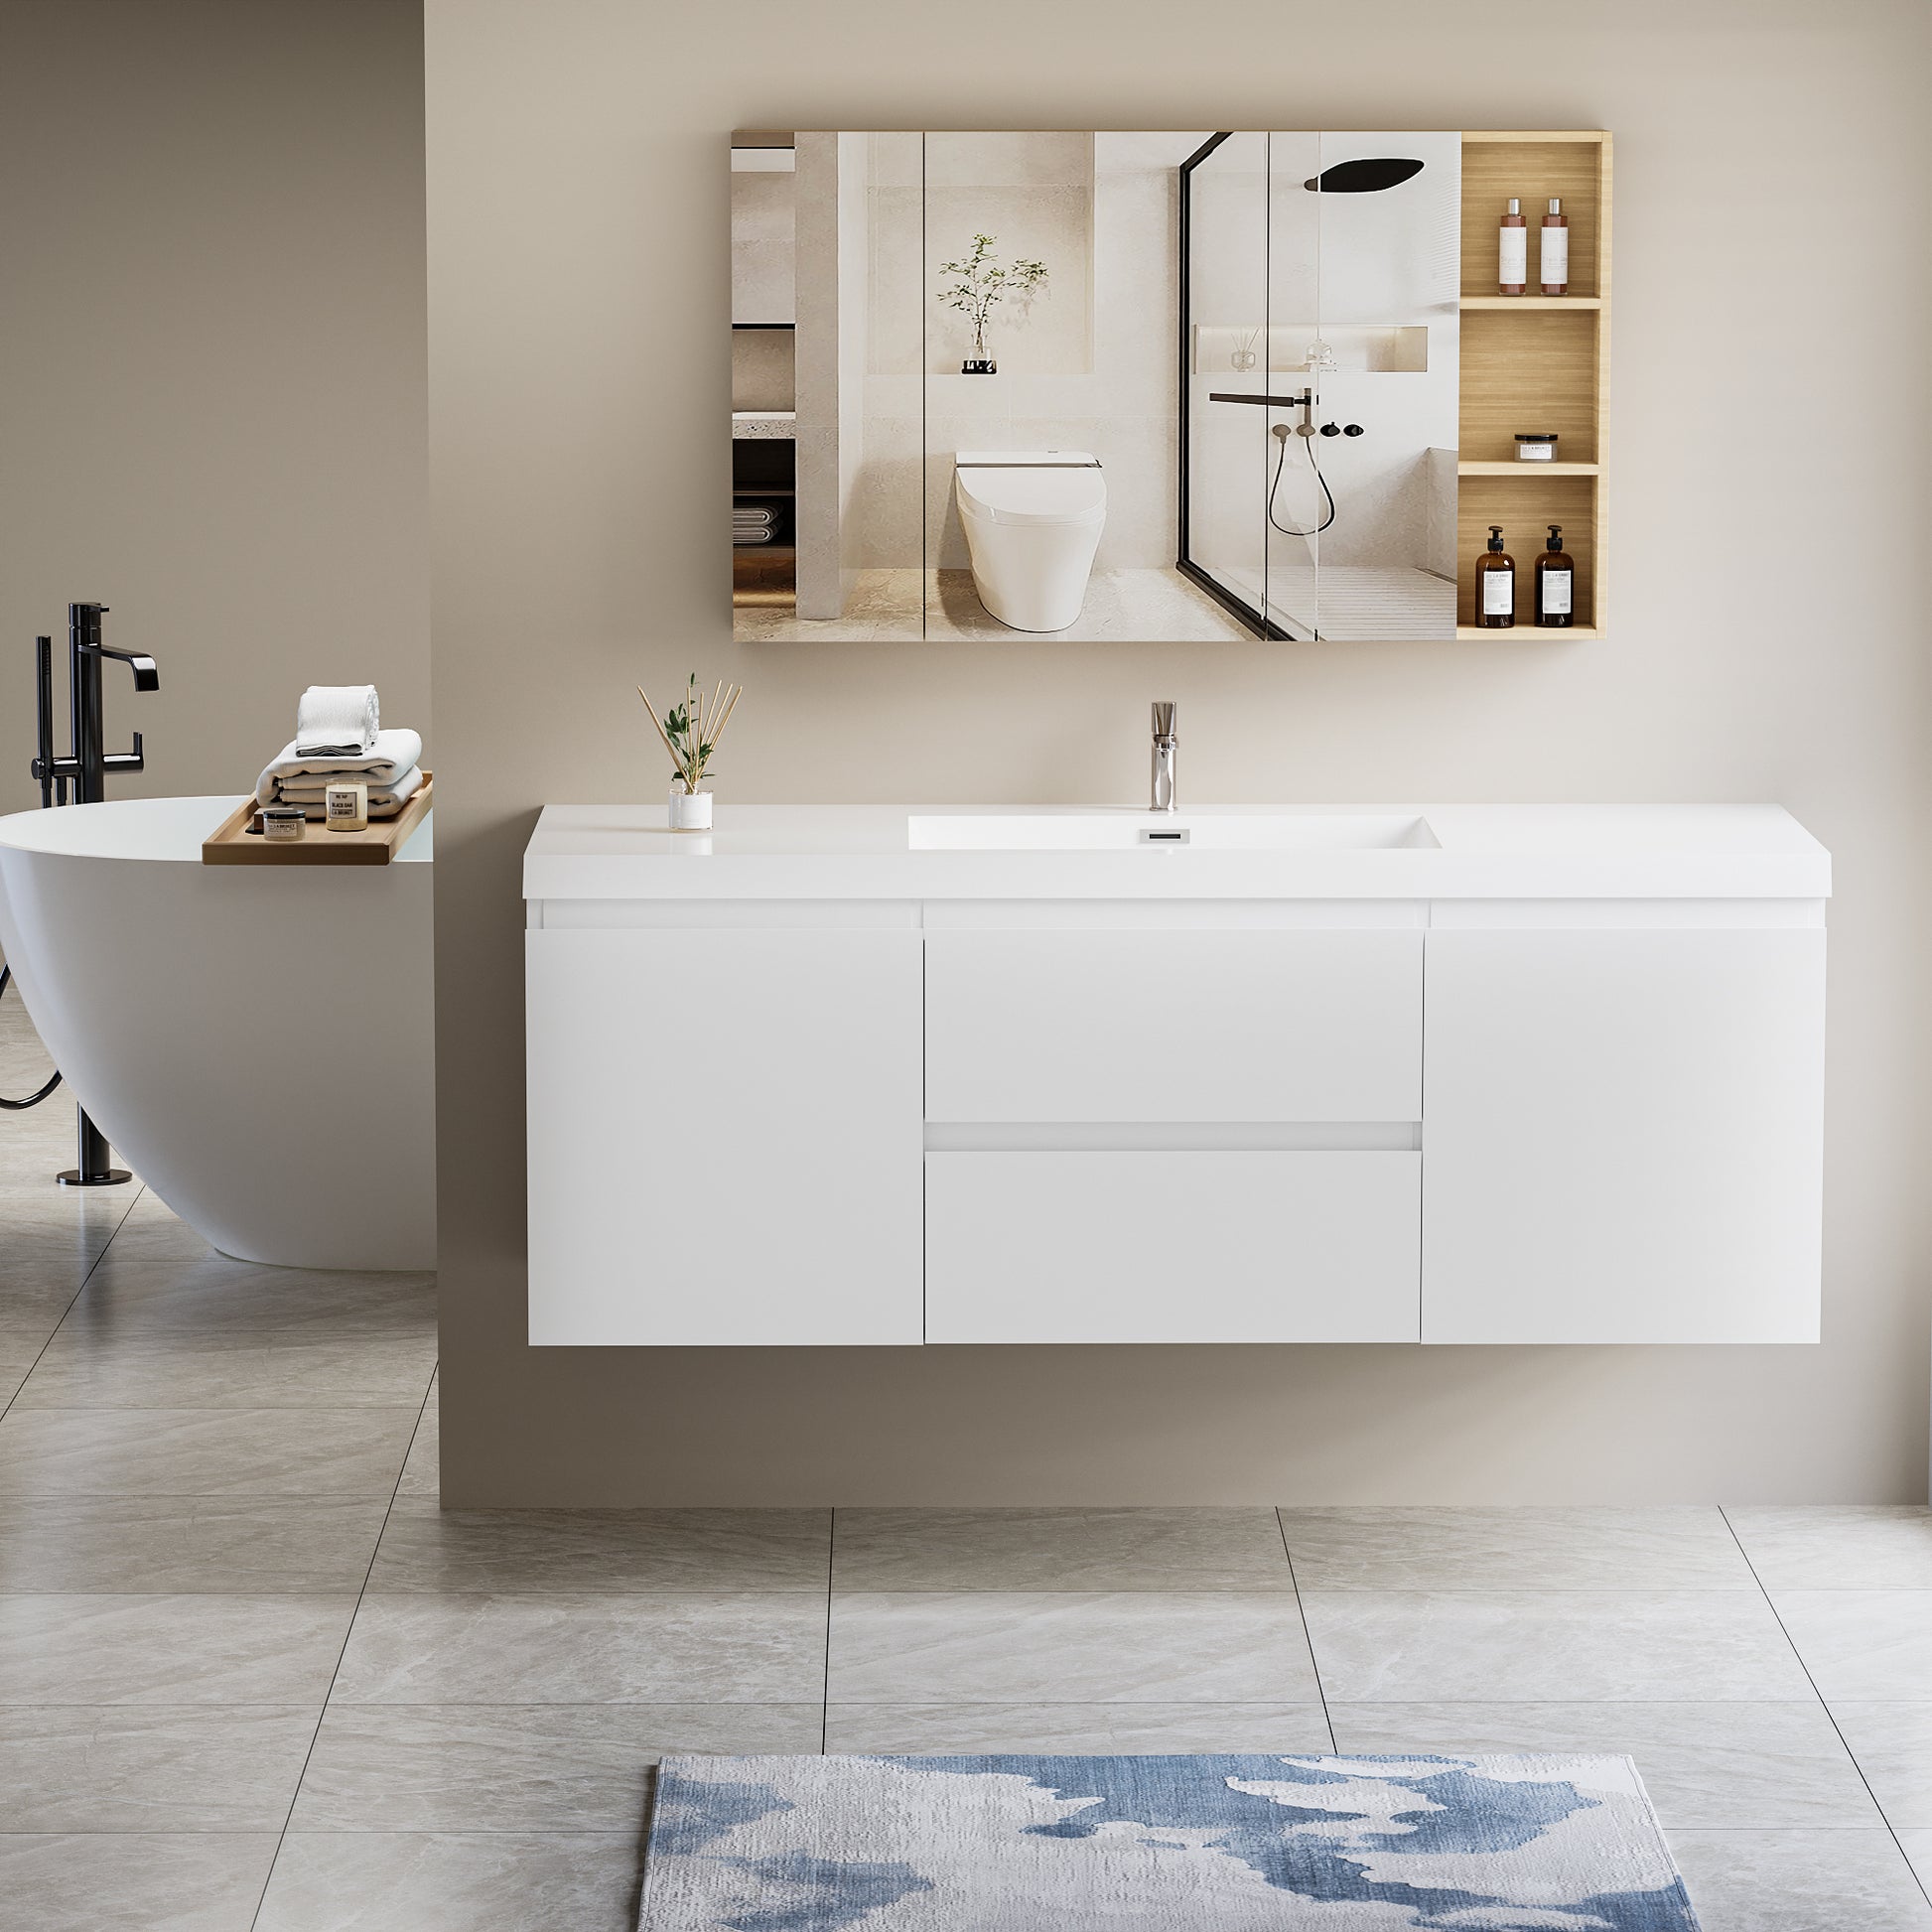 60" Floating Bathroom Vanity with Sink, Modern Wall 2-white-2-bathroom-wall mounted-mdf